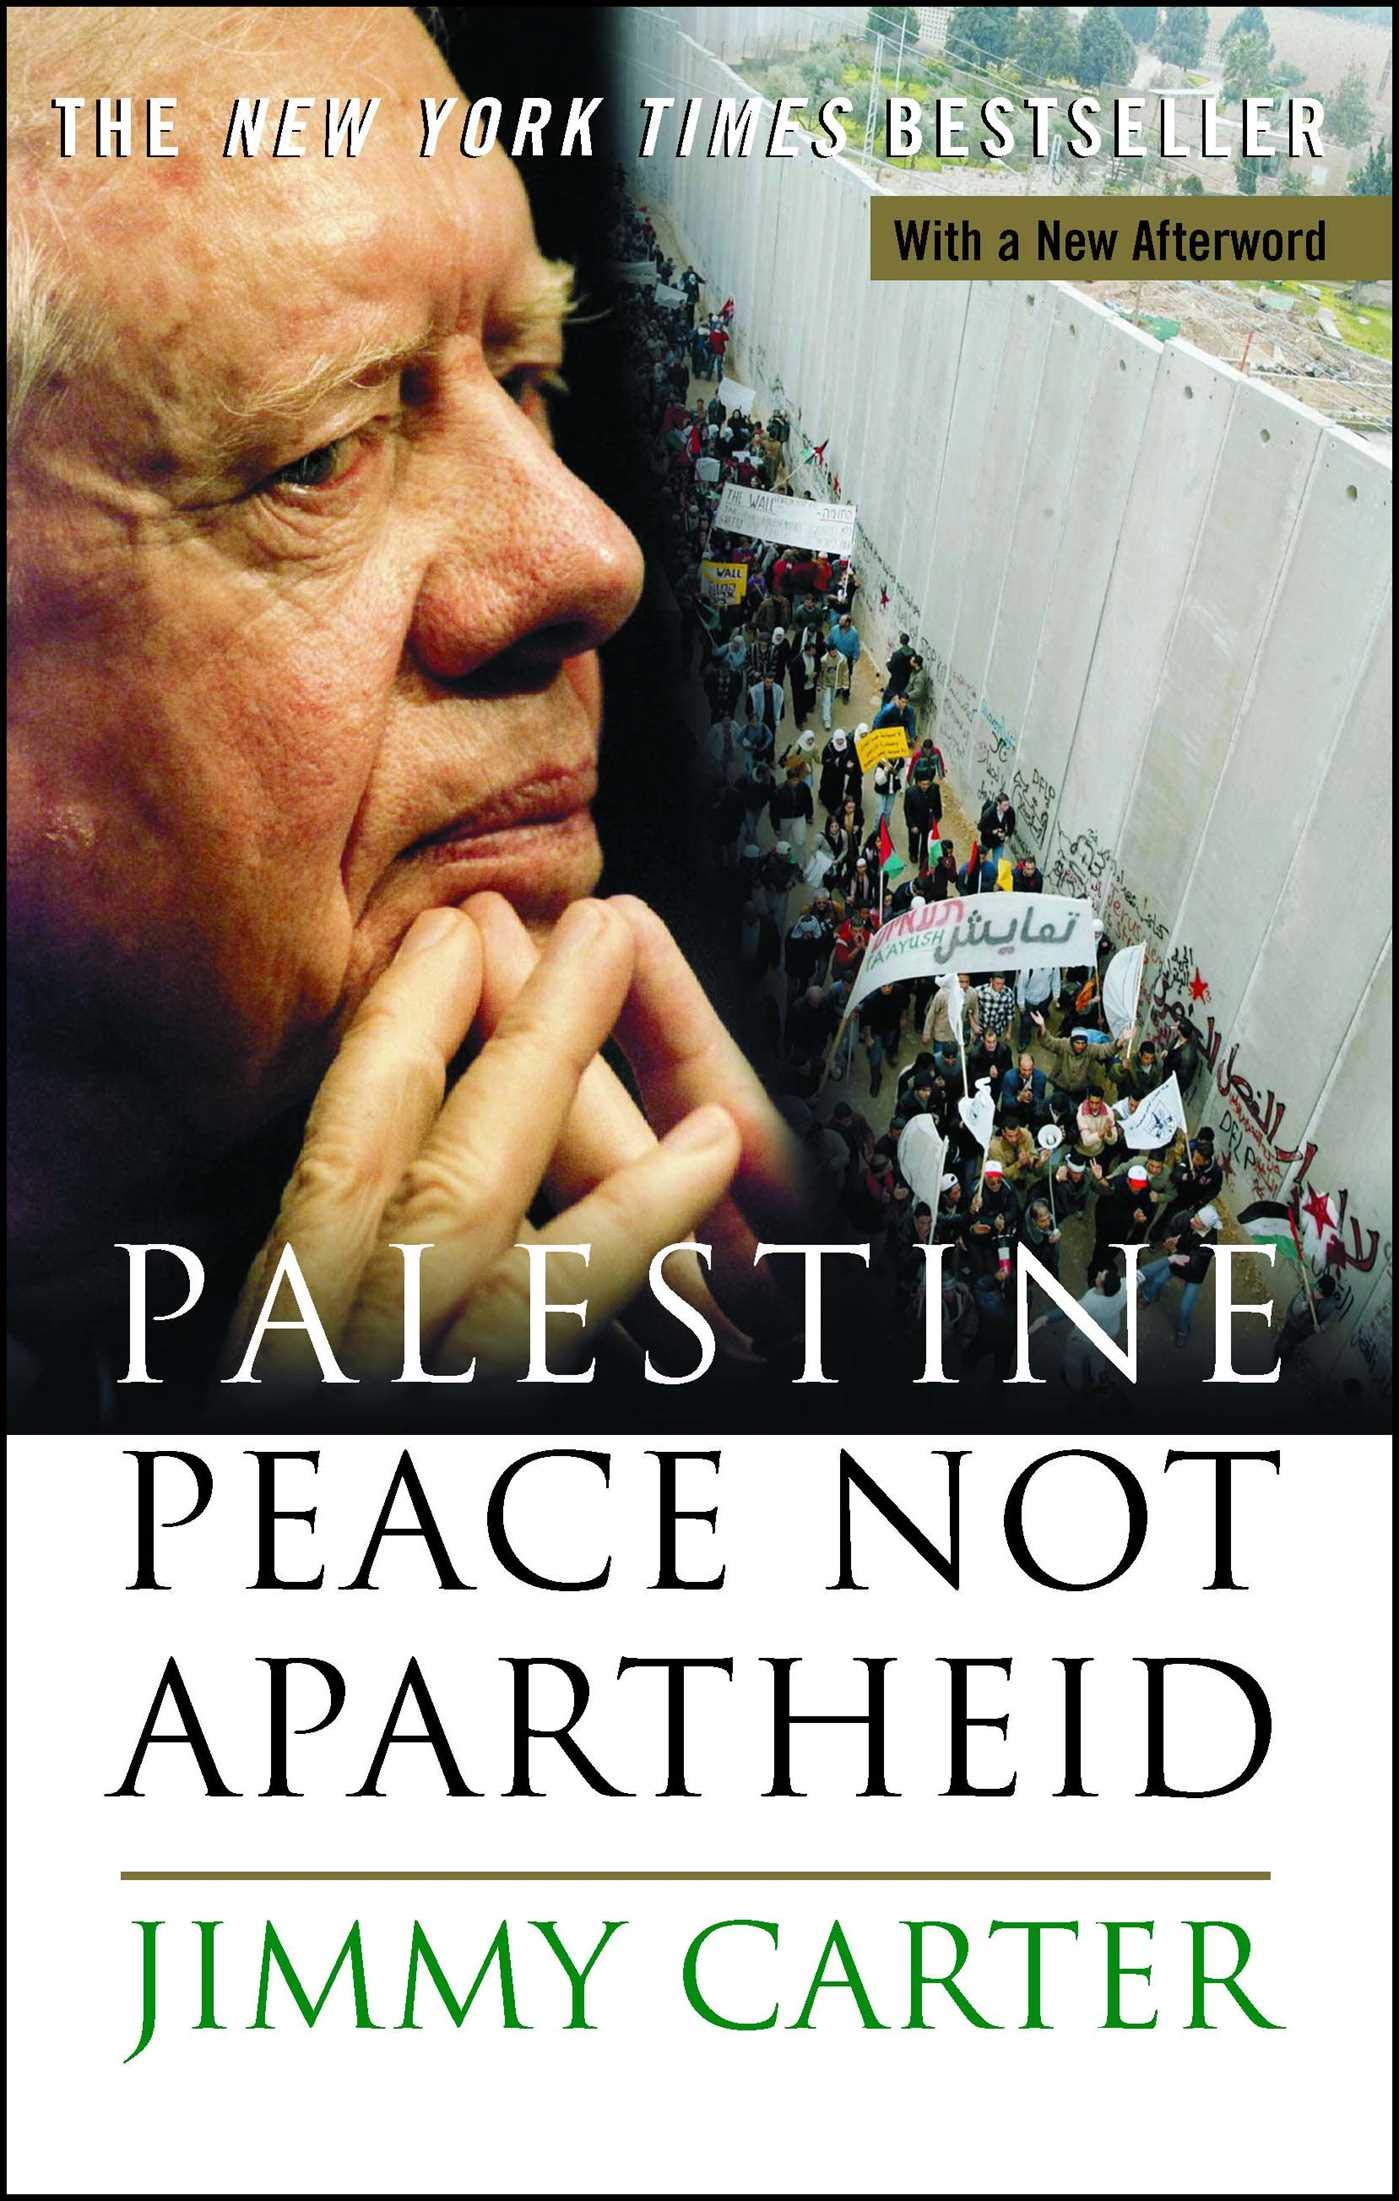 Palestine: Peace Not Apartheid